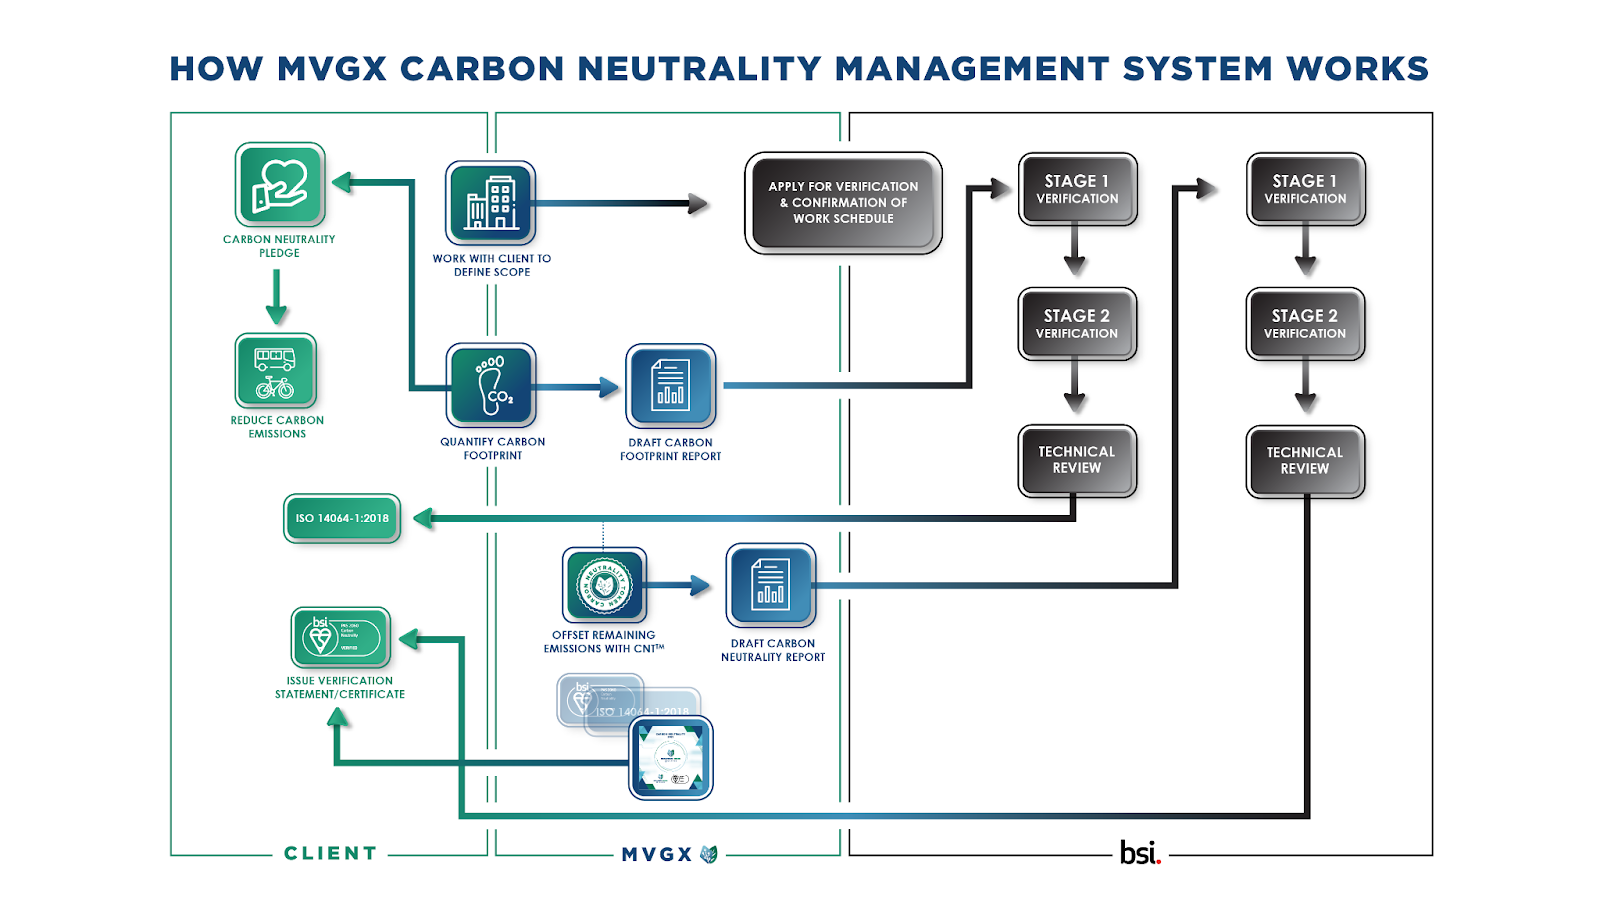 MVGX carbon neutrality management system